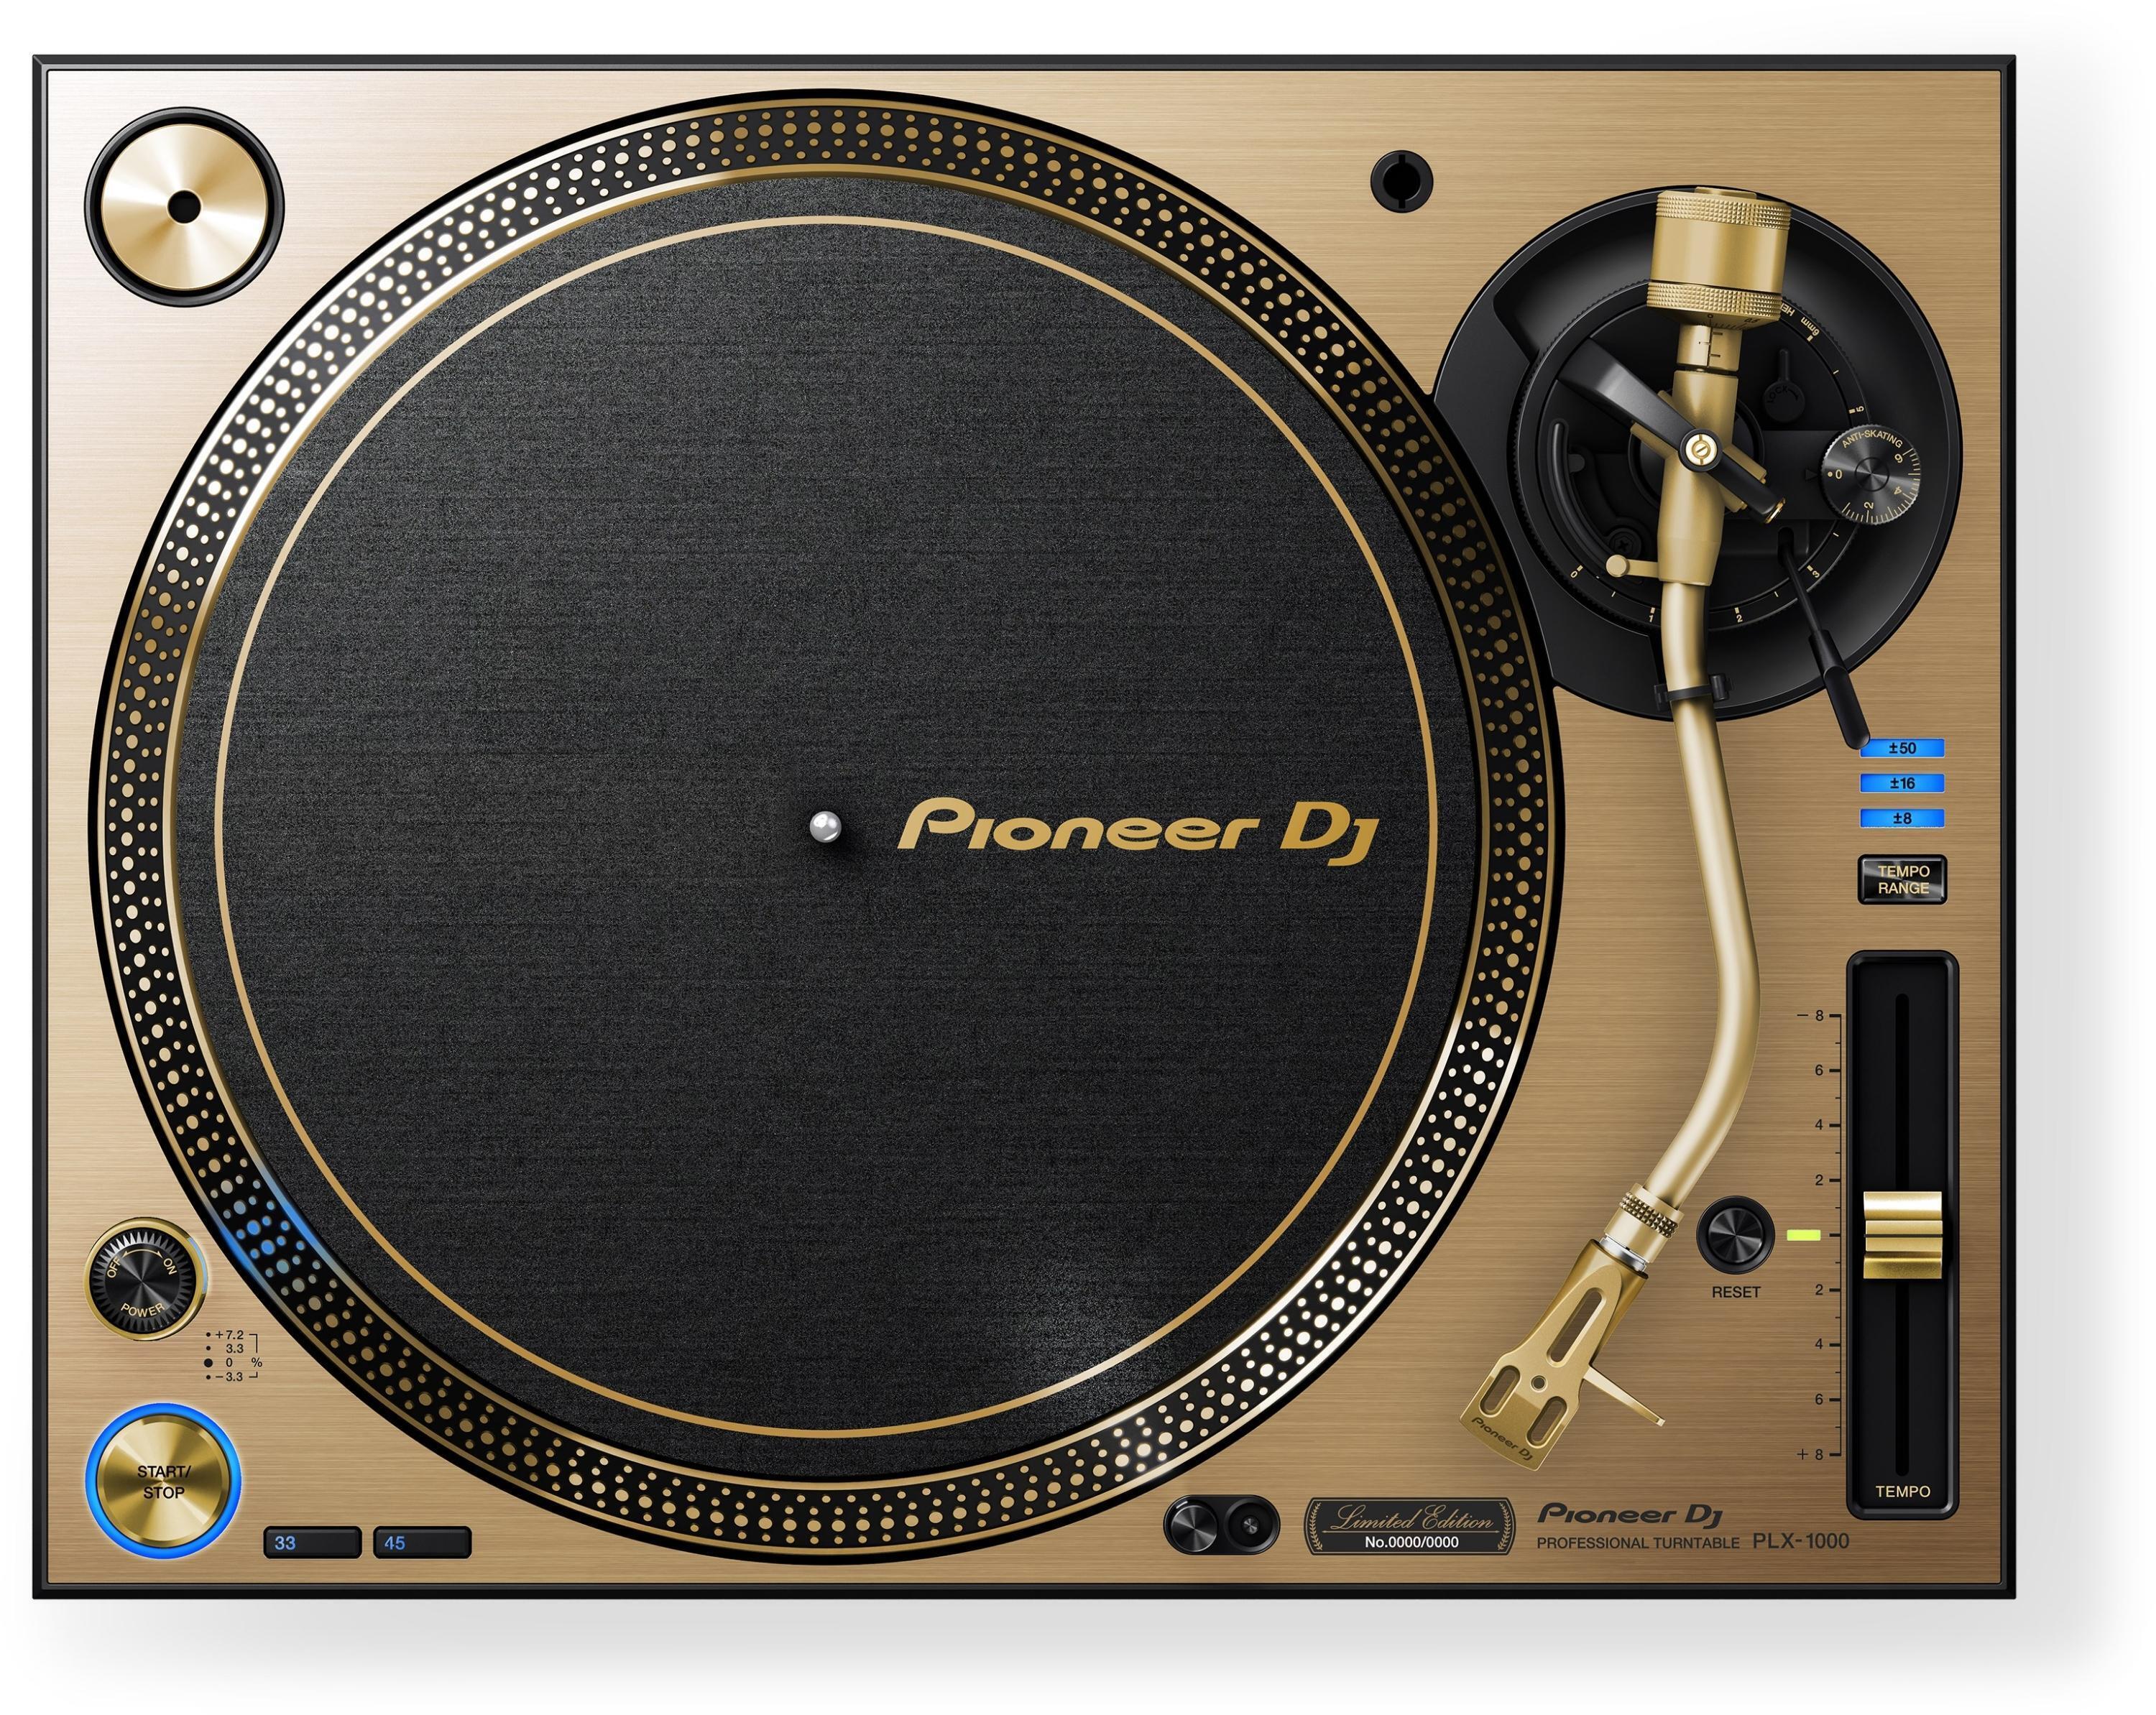 Pioneer DJ PLX-1000 Professional Turntable - Limited Edition Gold